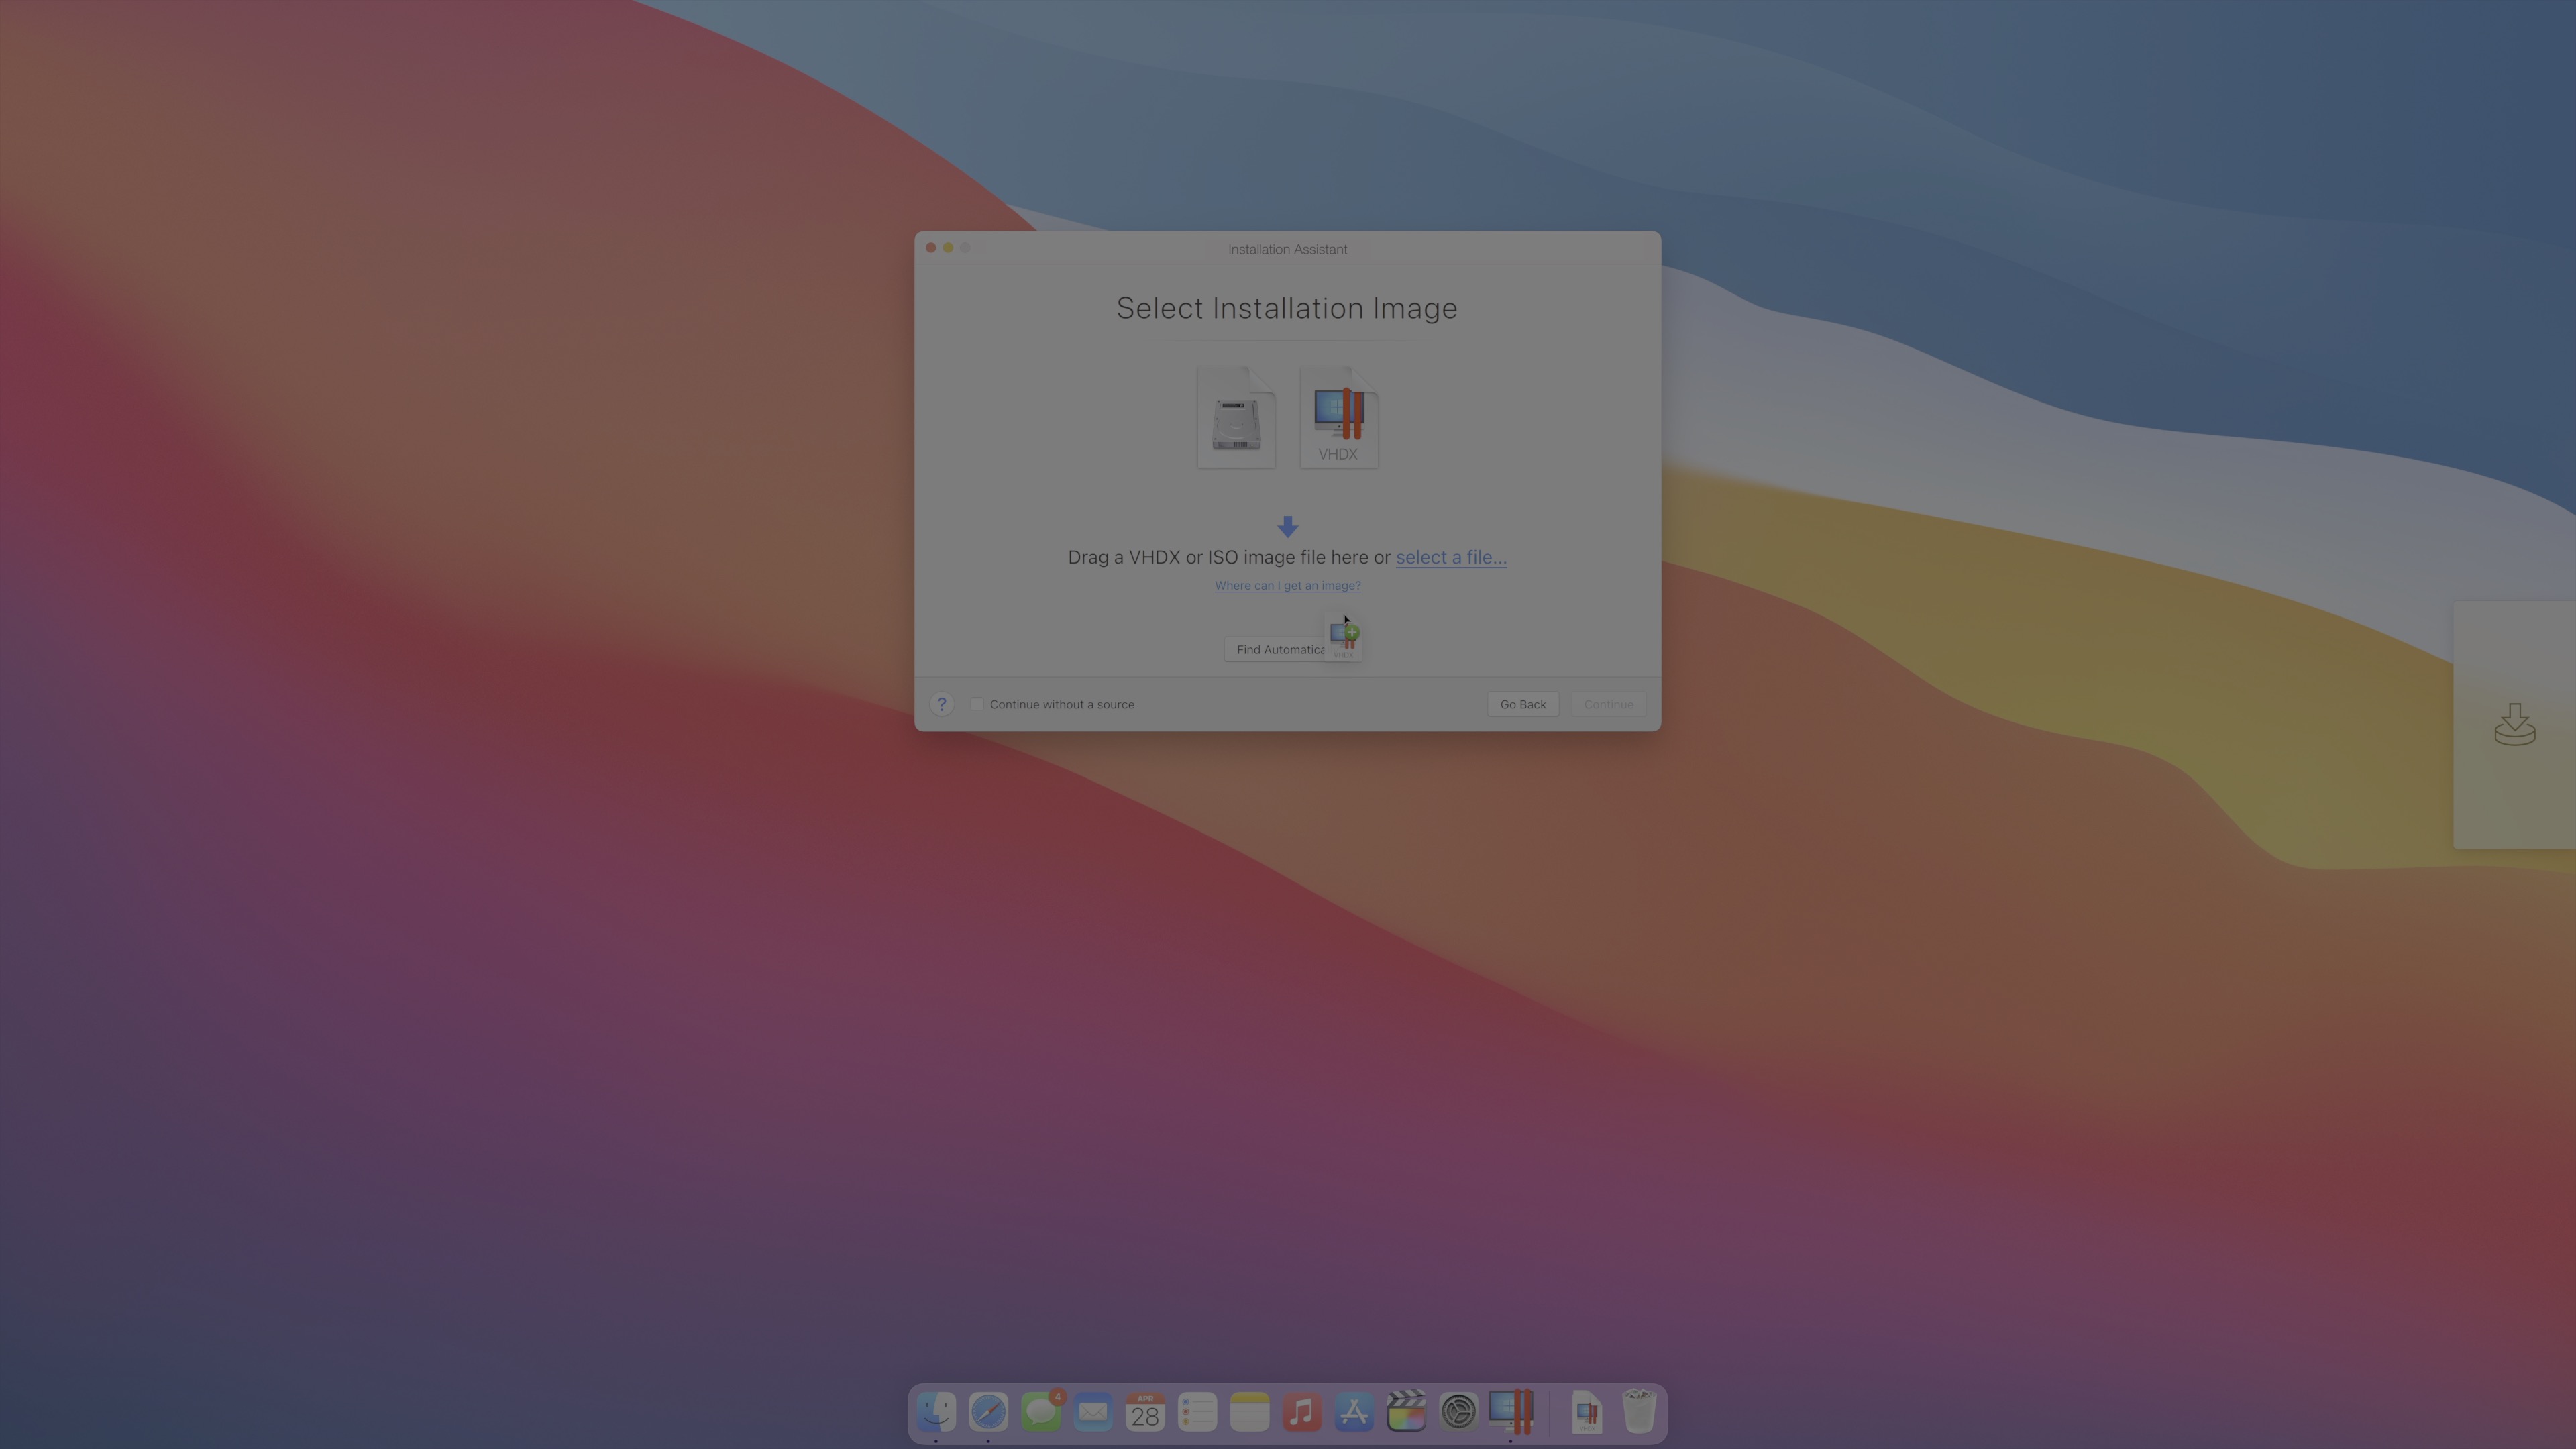 macbook air m1 install windows 10